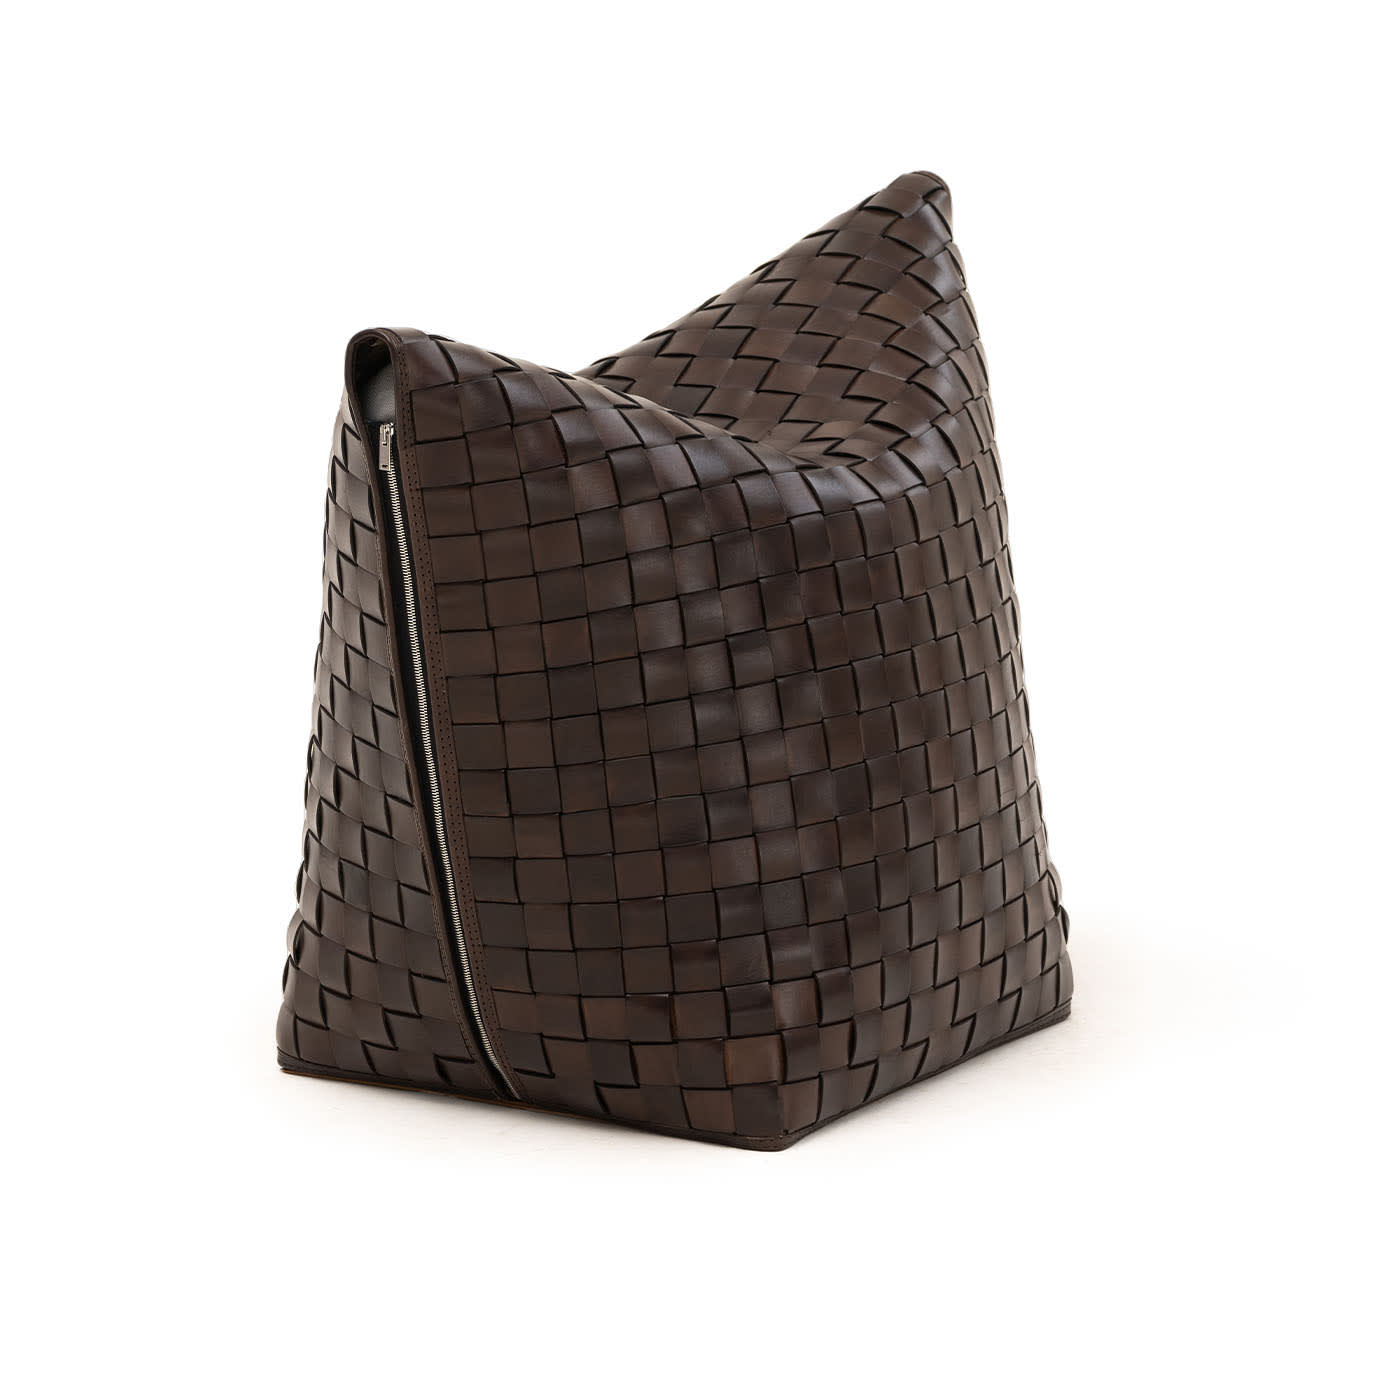 Weaved Mao Brown Bean Bag Chair